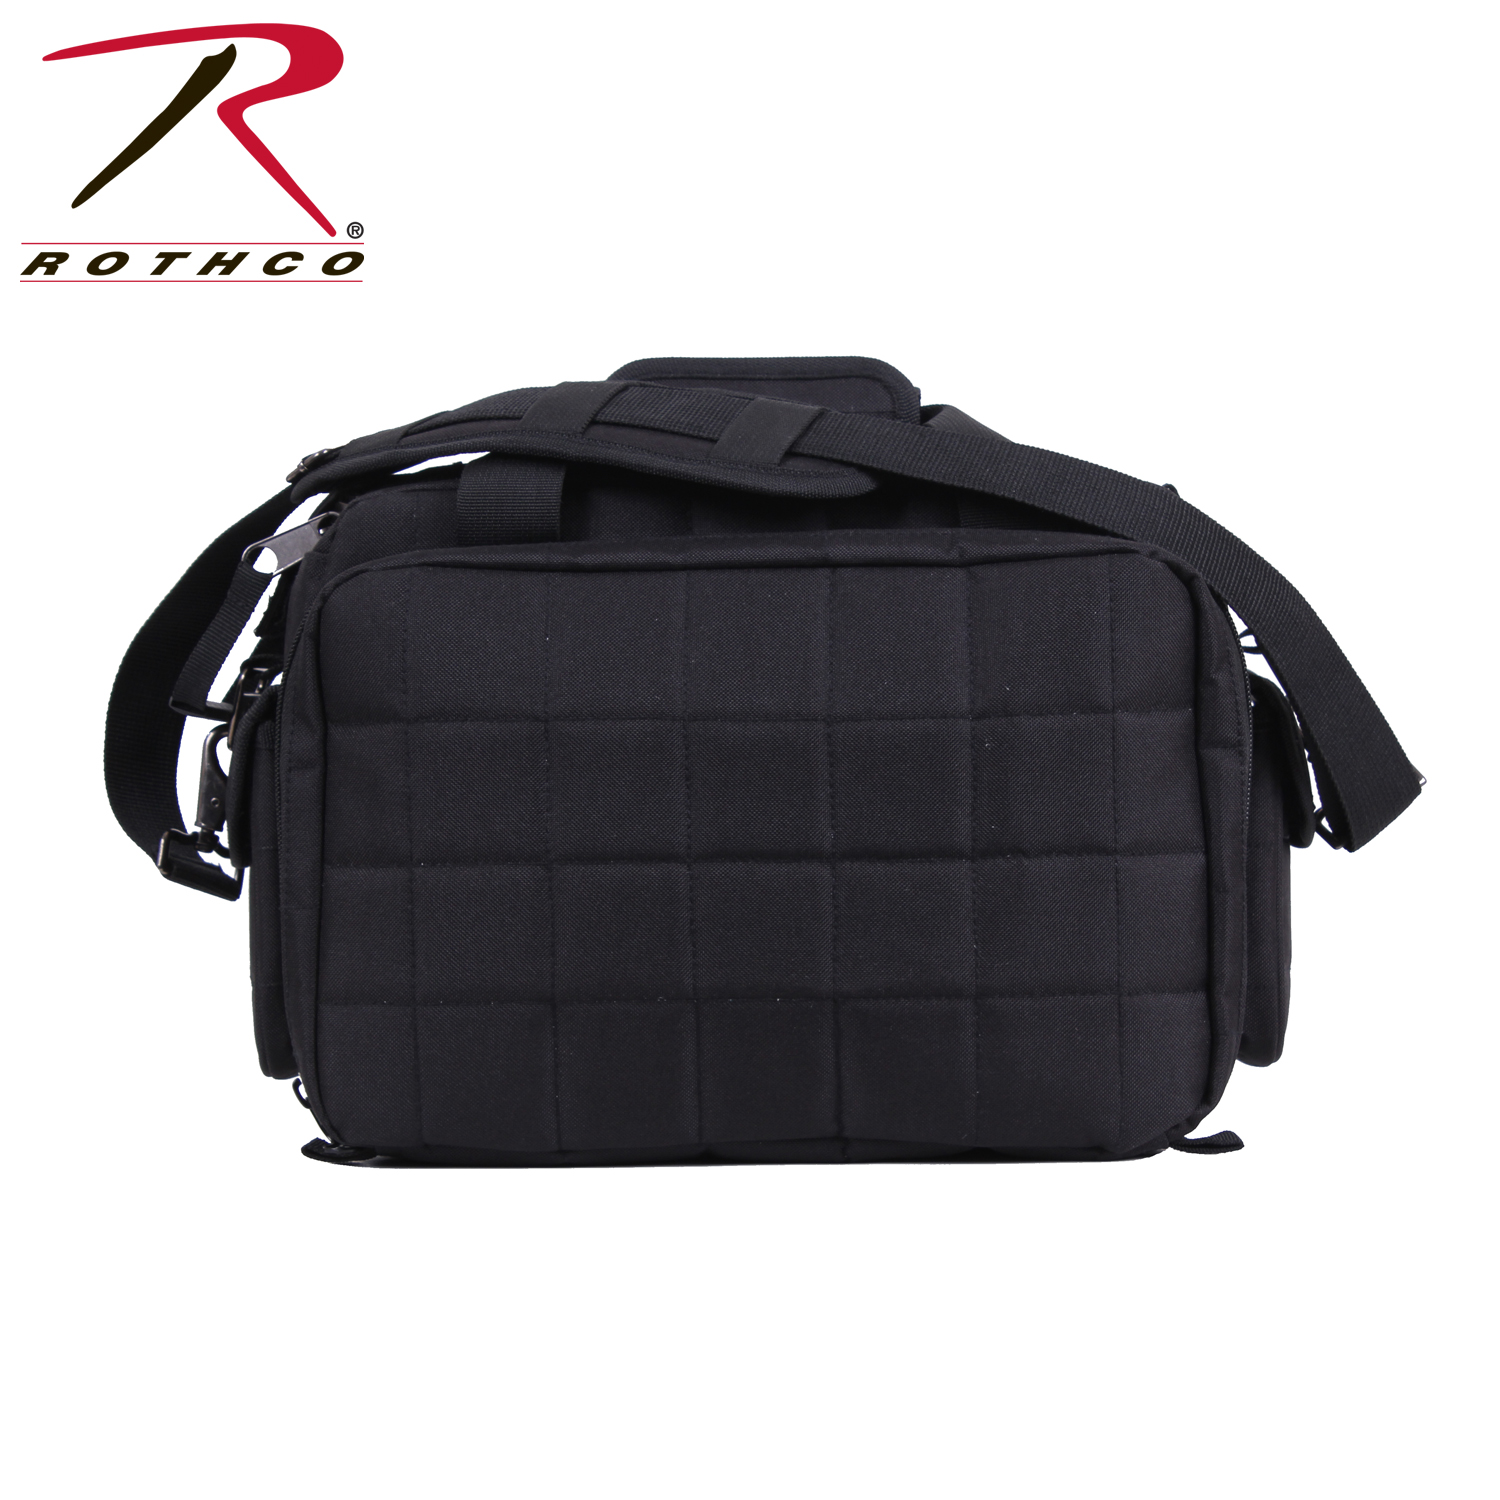 Rothco 2849 Specialist Range & Go Bag Black 